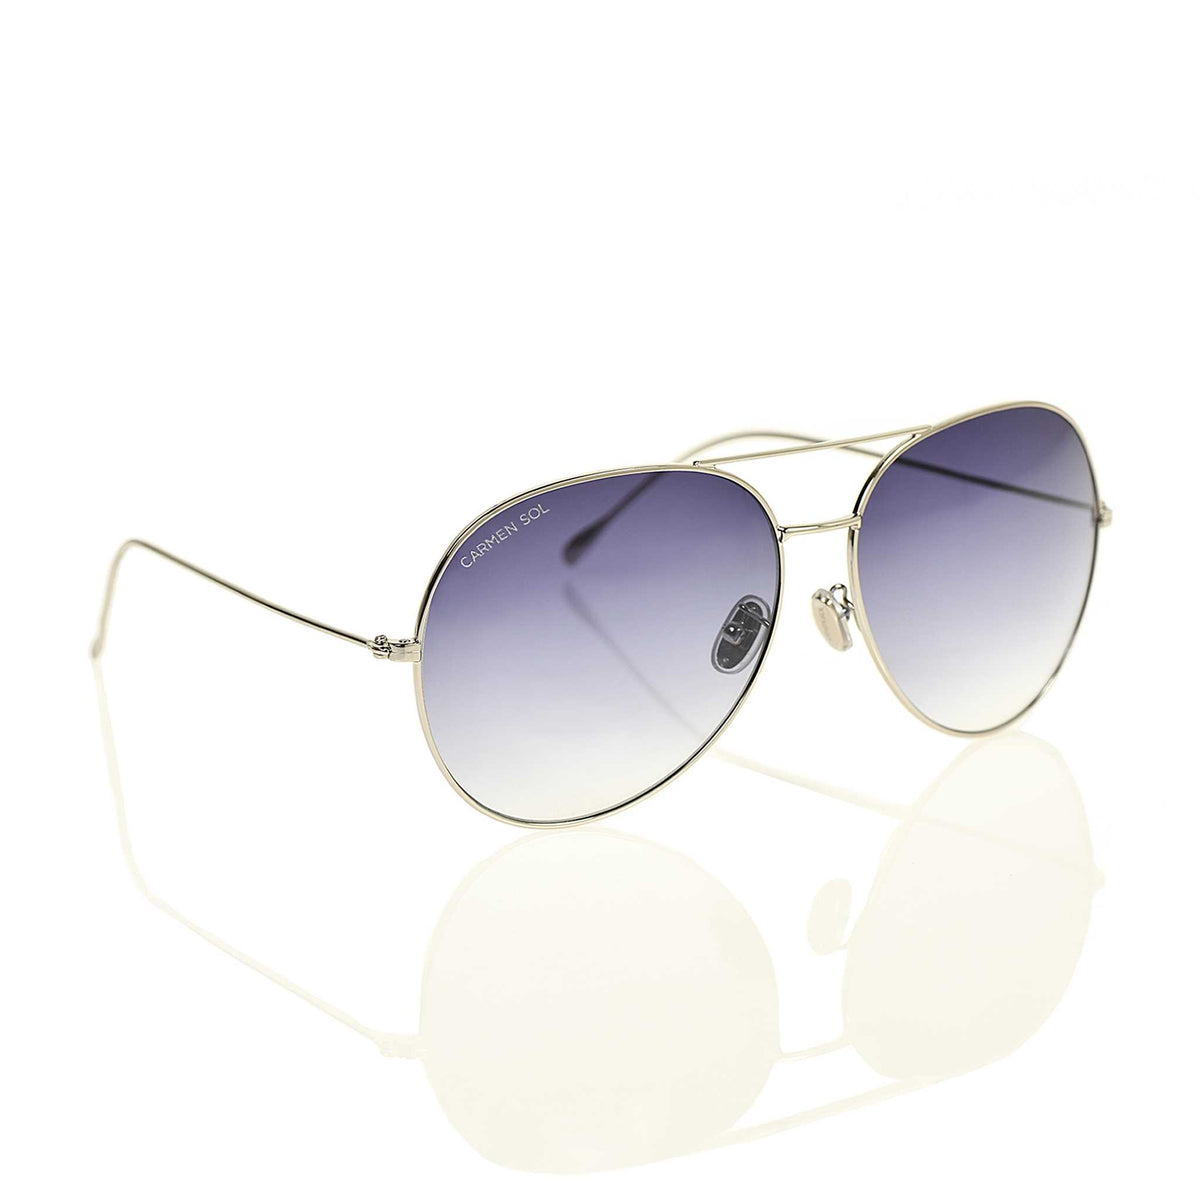 Aviator sunglasses women with lenses in dark grey